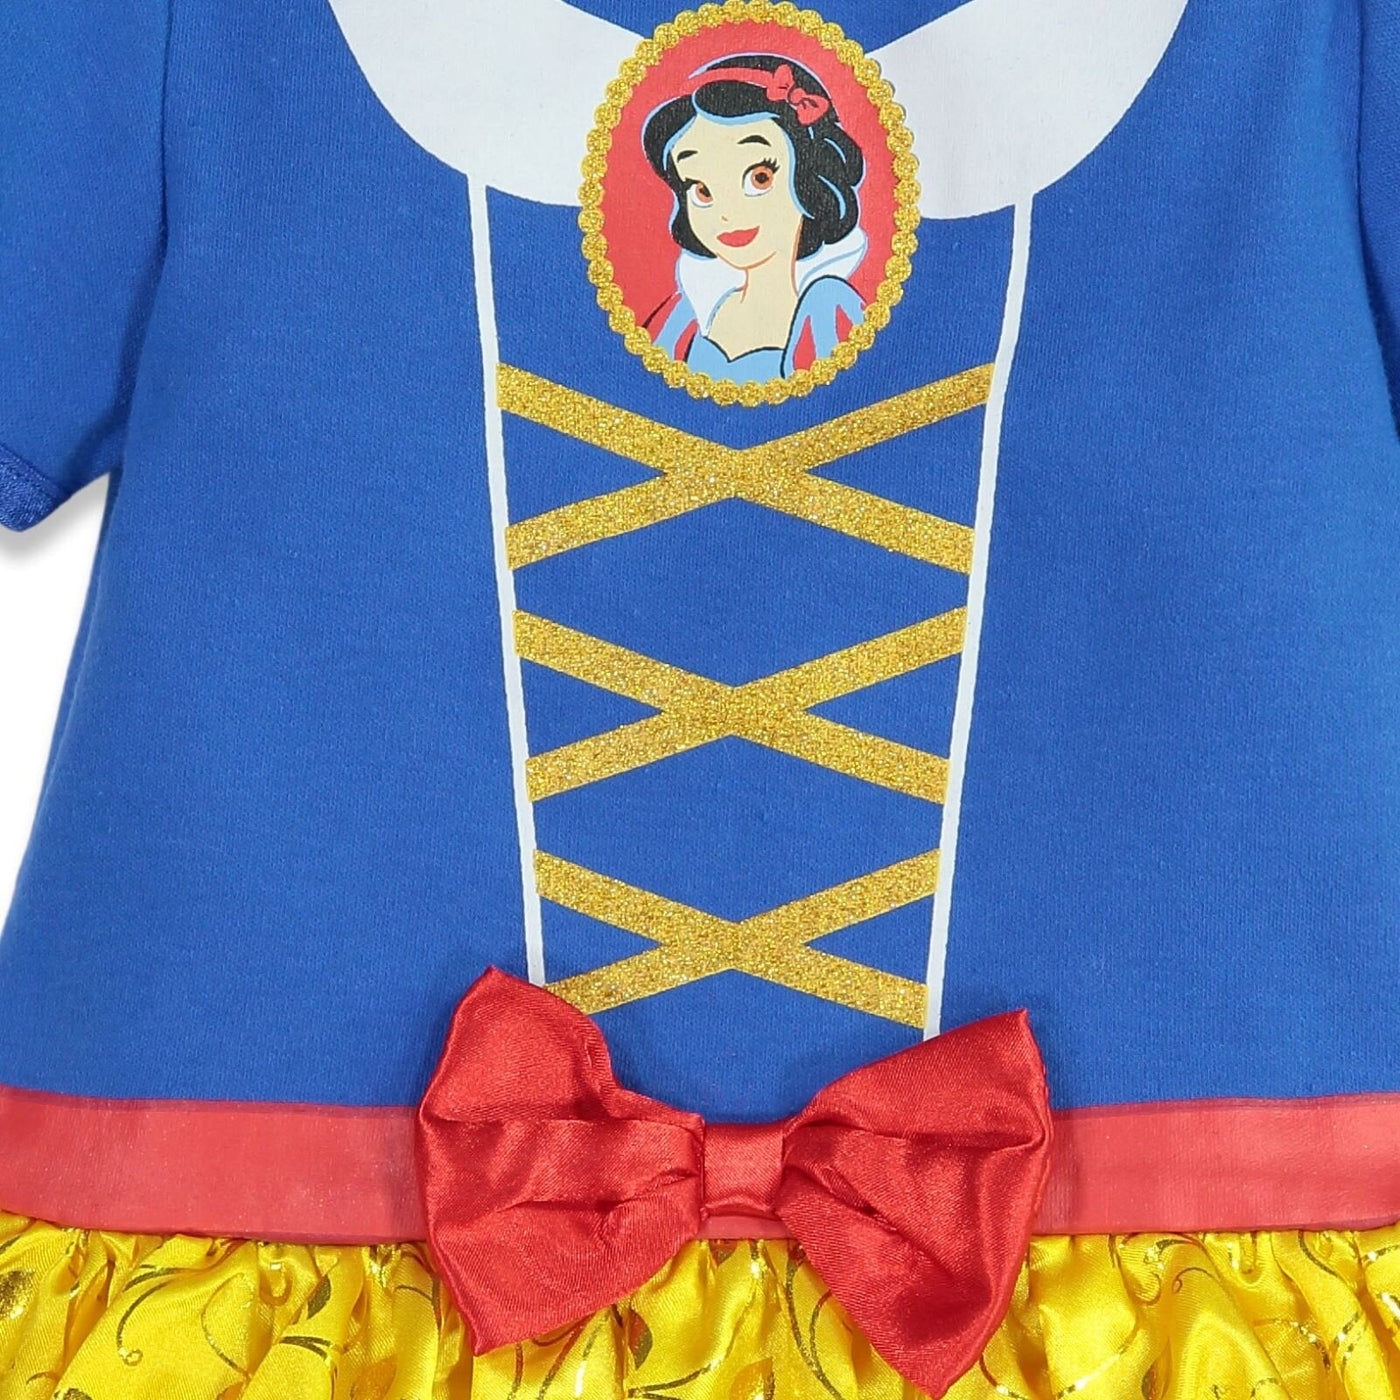 Disney Princess Snow White Dress and Headband - imagikids